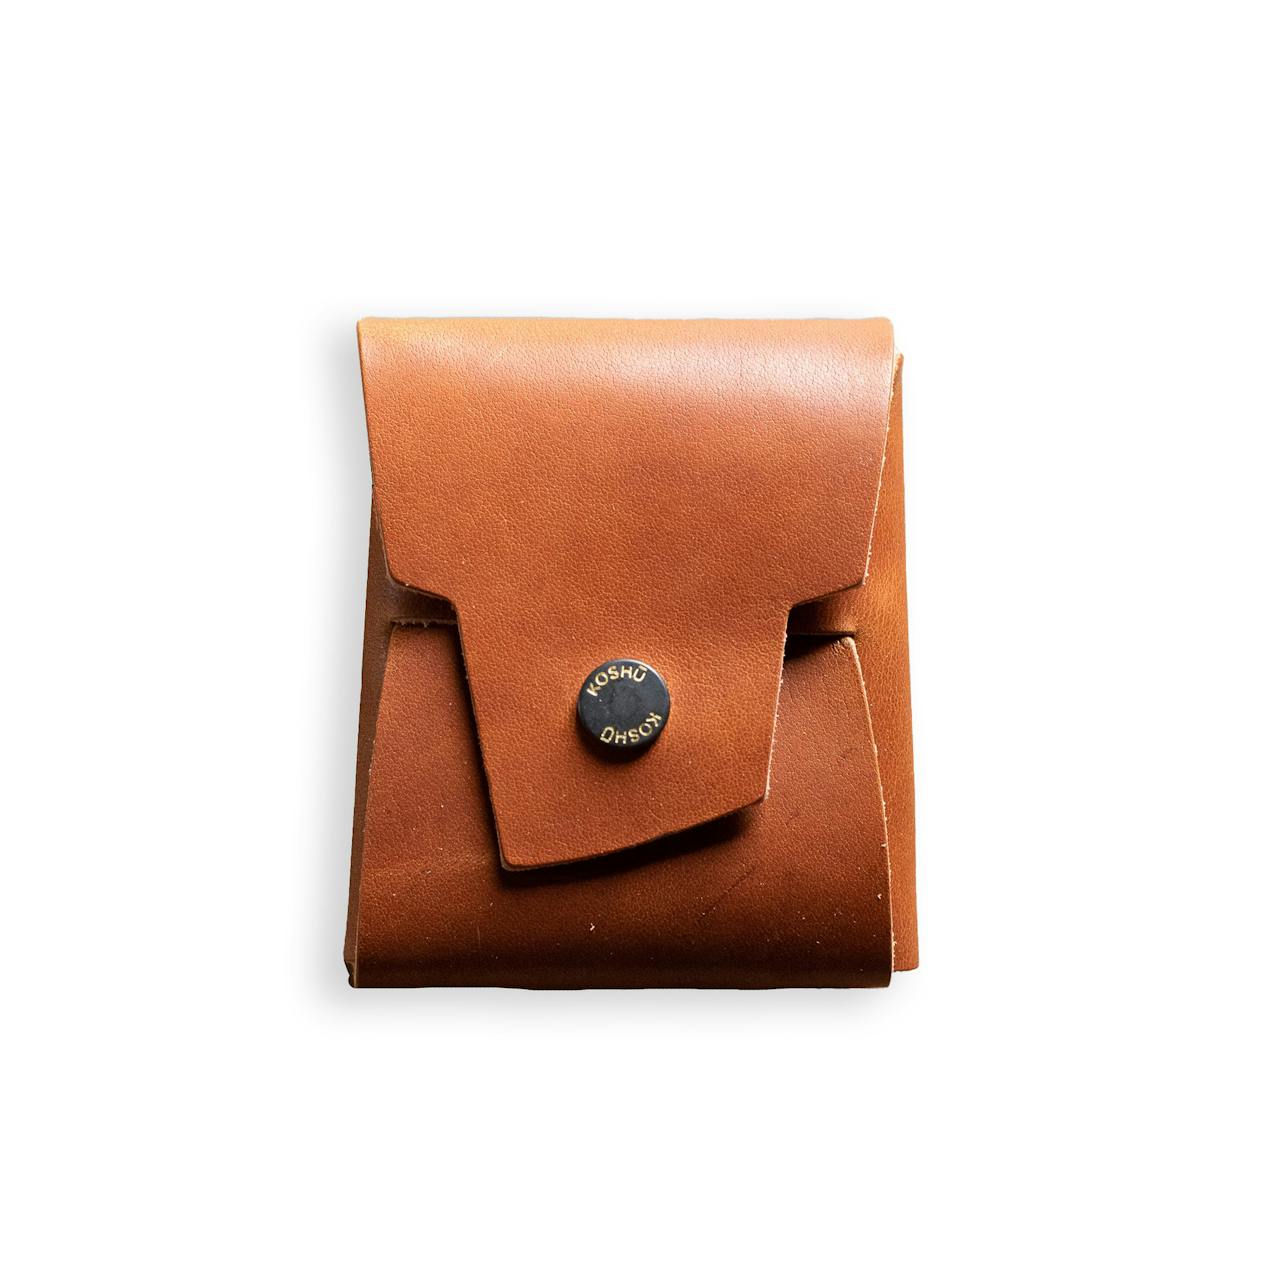 Koshu Origami Leather Wallet - Bourbon Dublin/Black Brass